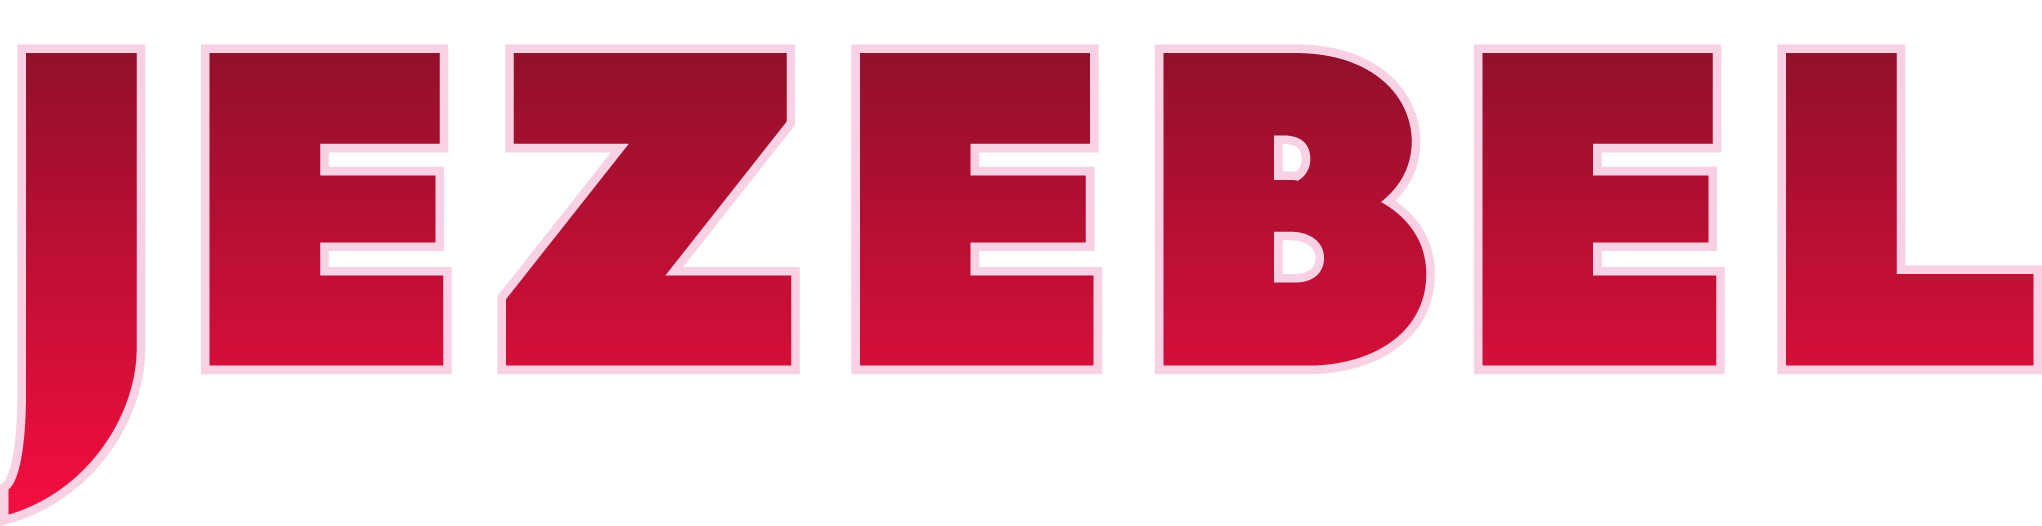 Jezebel-logo.png